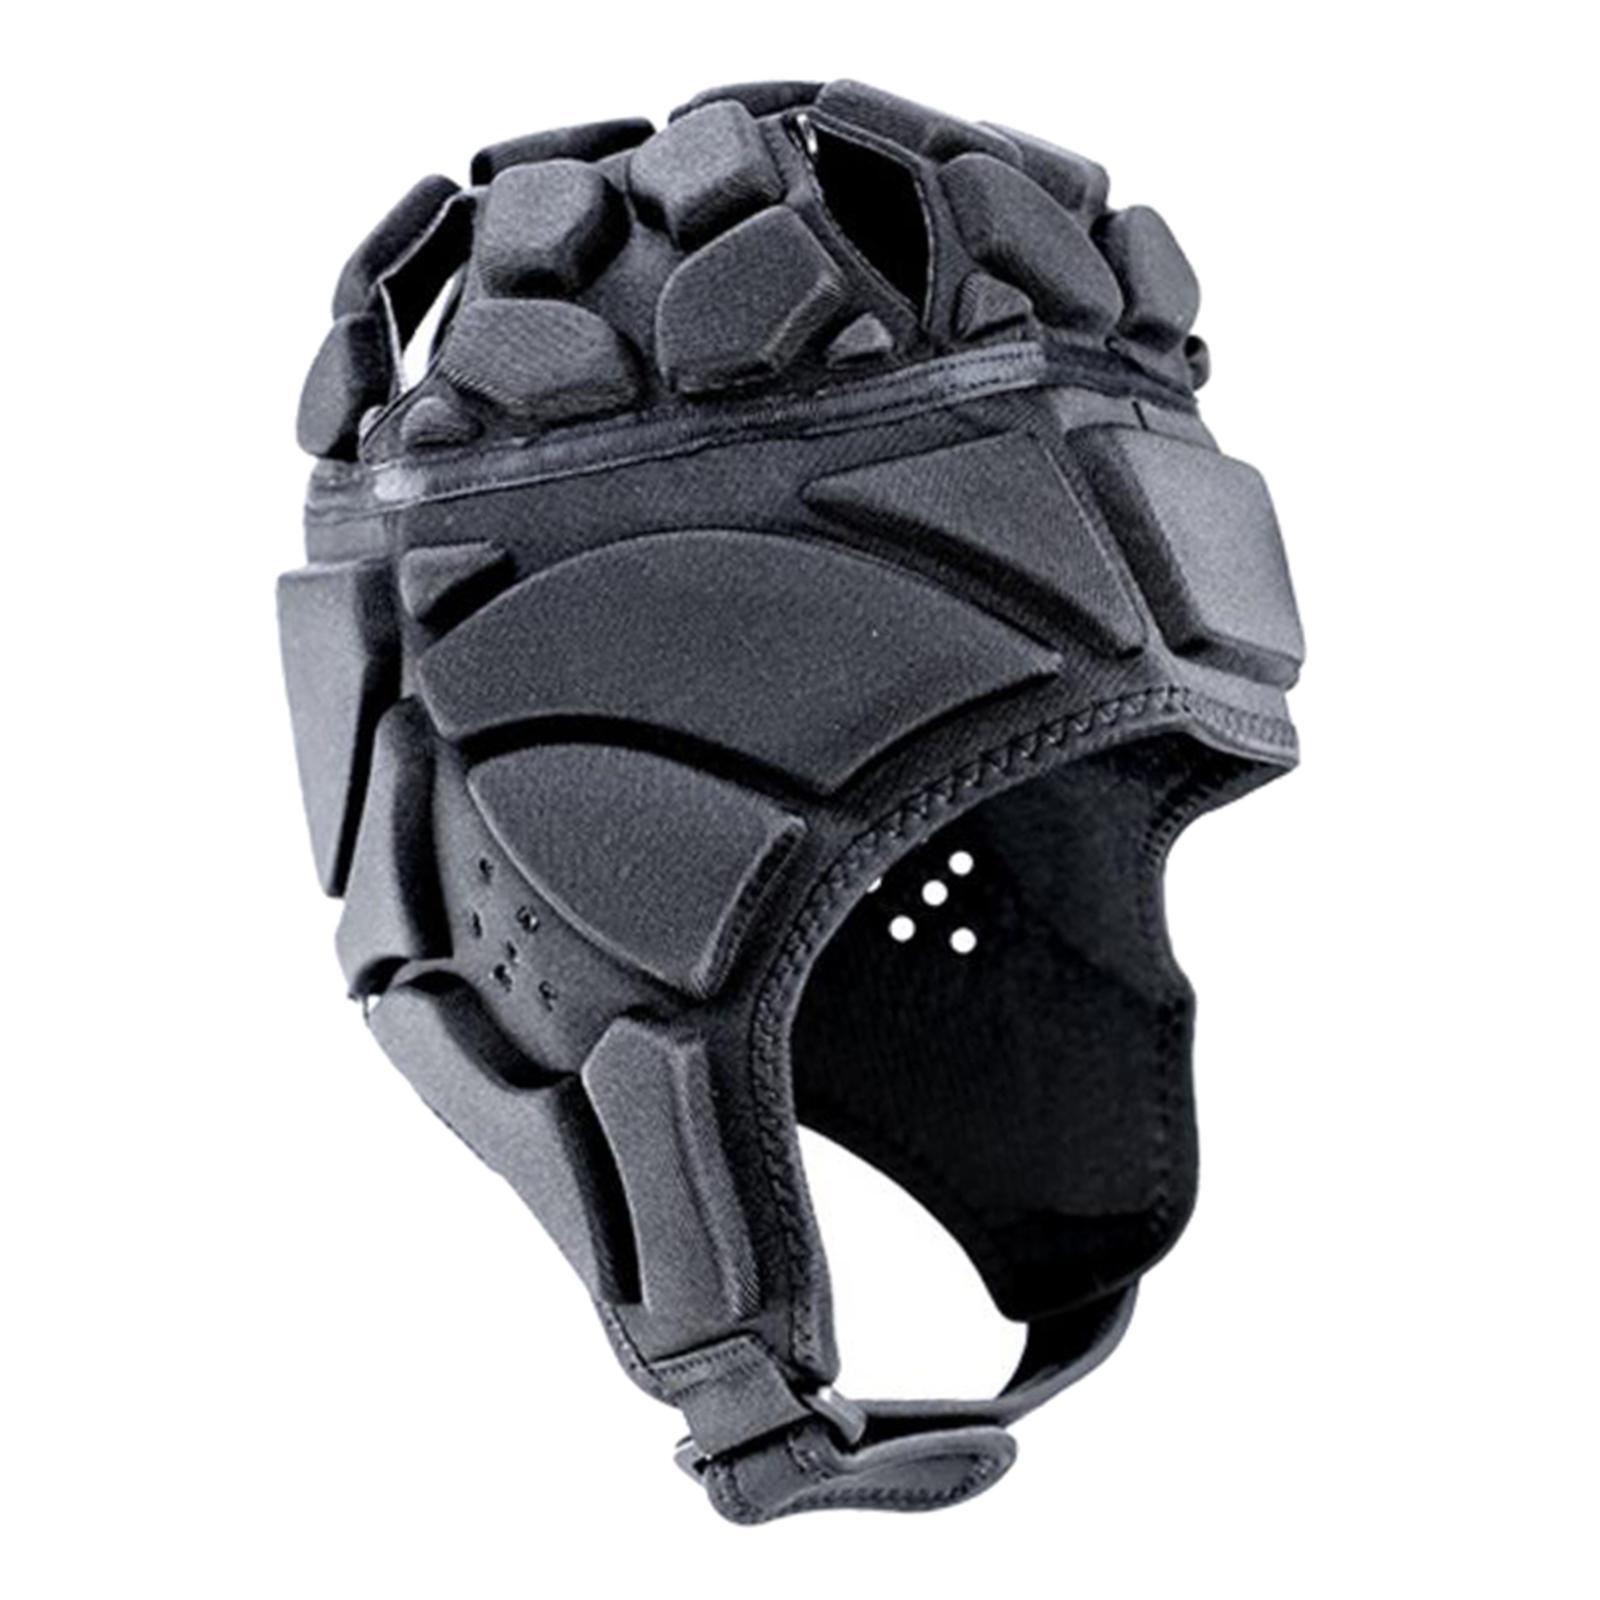 2 Rugby  Headgear Scrum Cap Hockey Head Protector Protect Hat Black